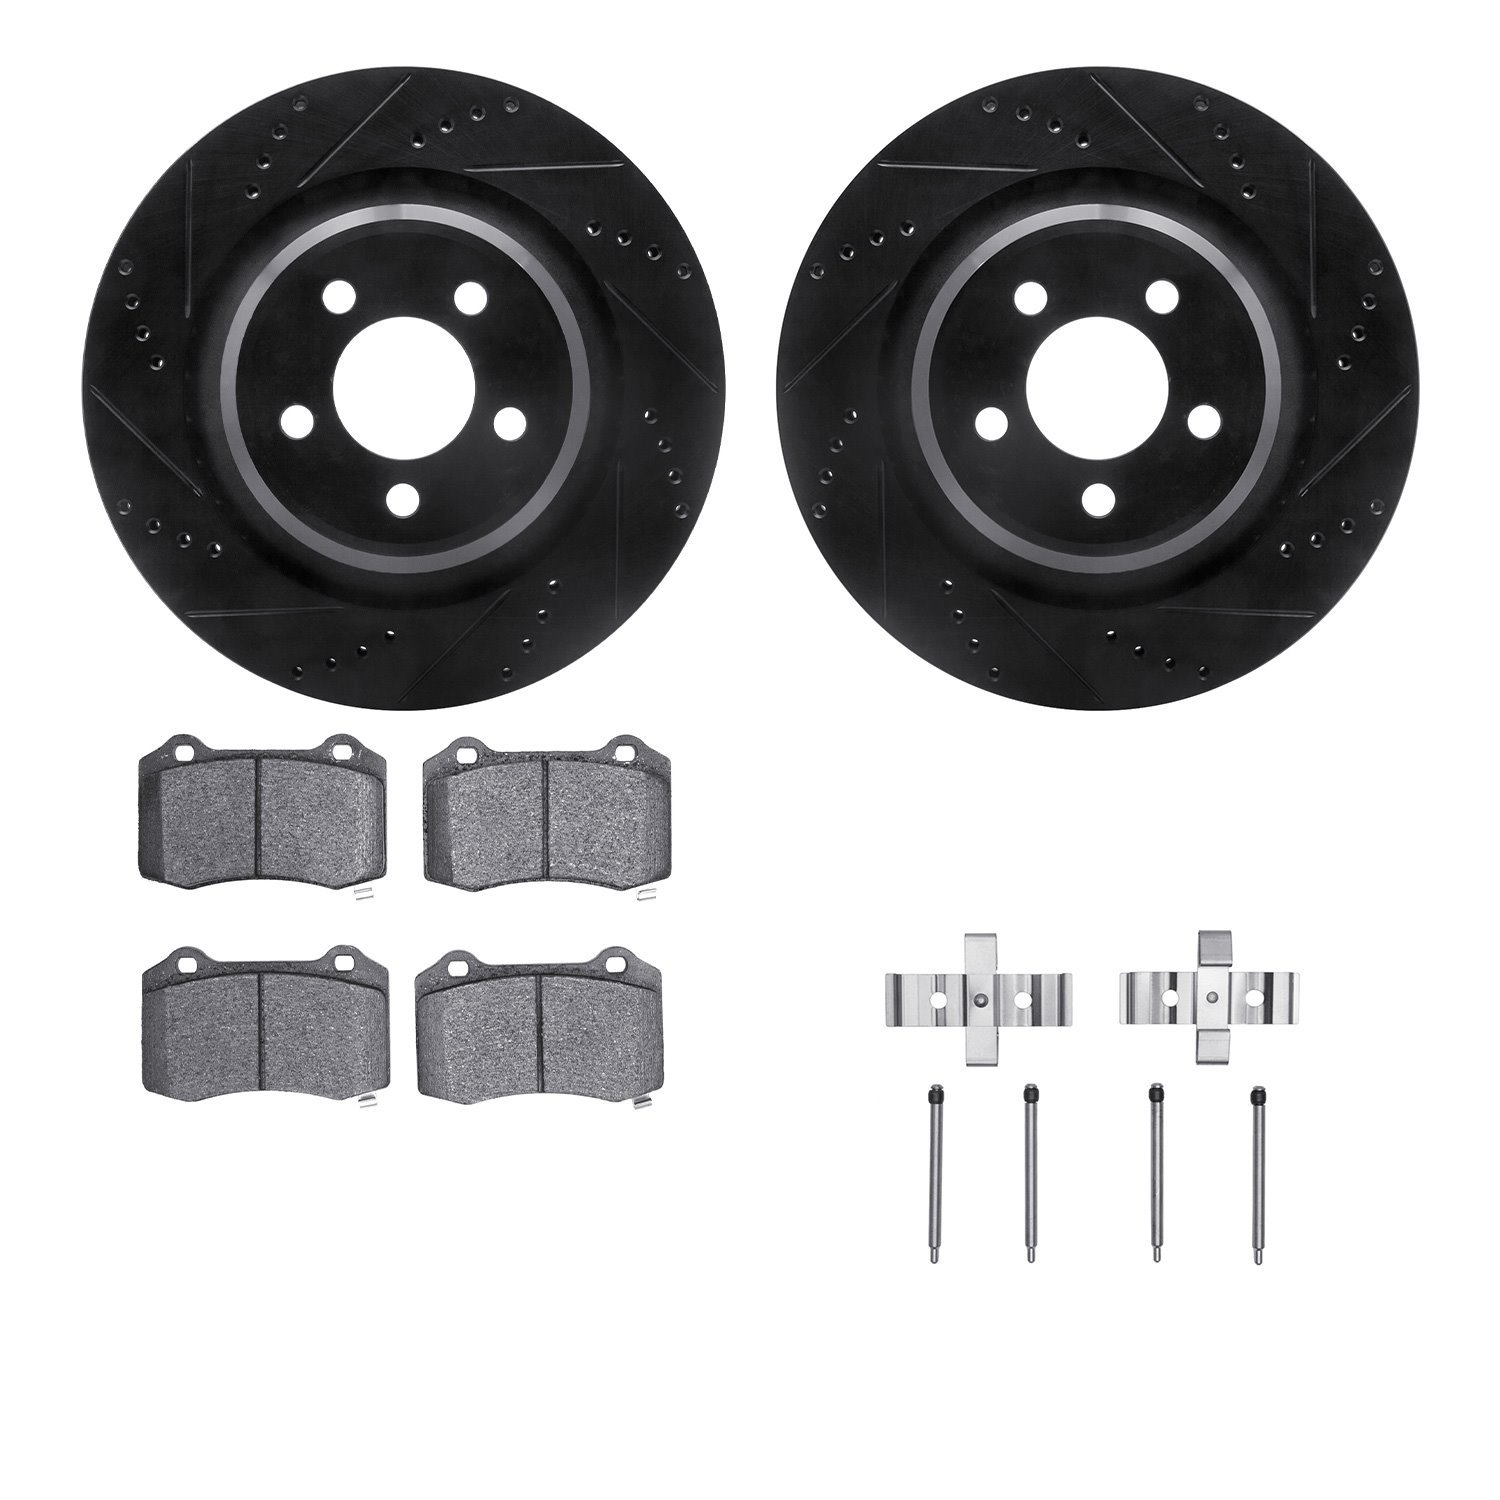 8412-39002 Drilled/Slotted Brake Rotors with Ultimate-Duty Brake Pads Kit & Hardware [Black], Fits Select Mopar, Position: Rear